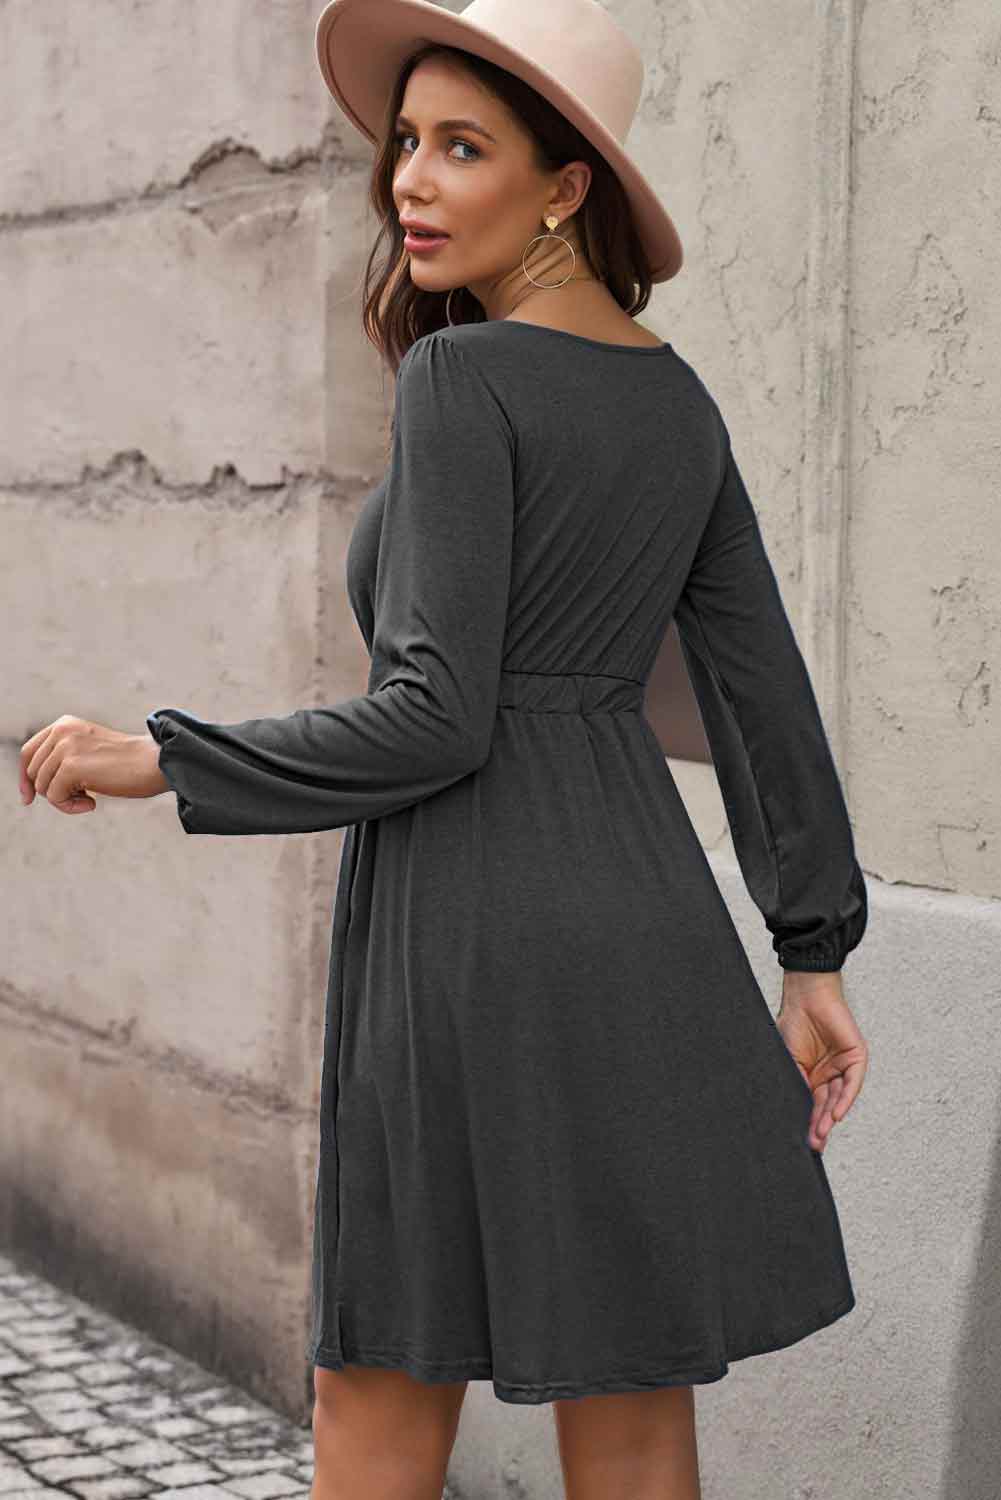 Scoop Neck Empire Waist Long Sleeve Mini Dress Print on any thing USA/STOD clothes